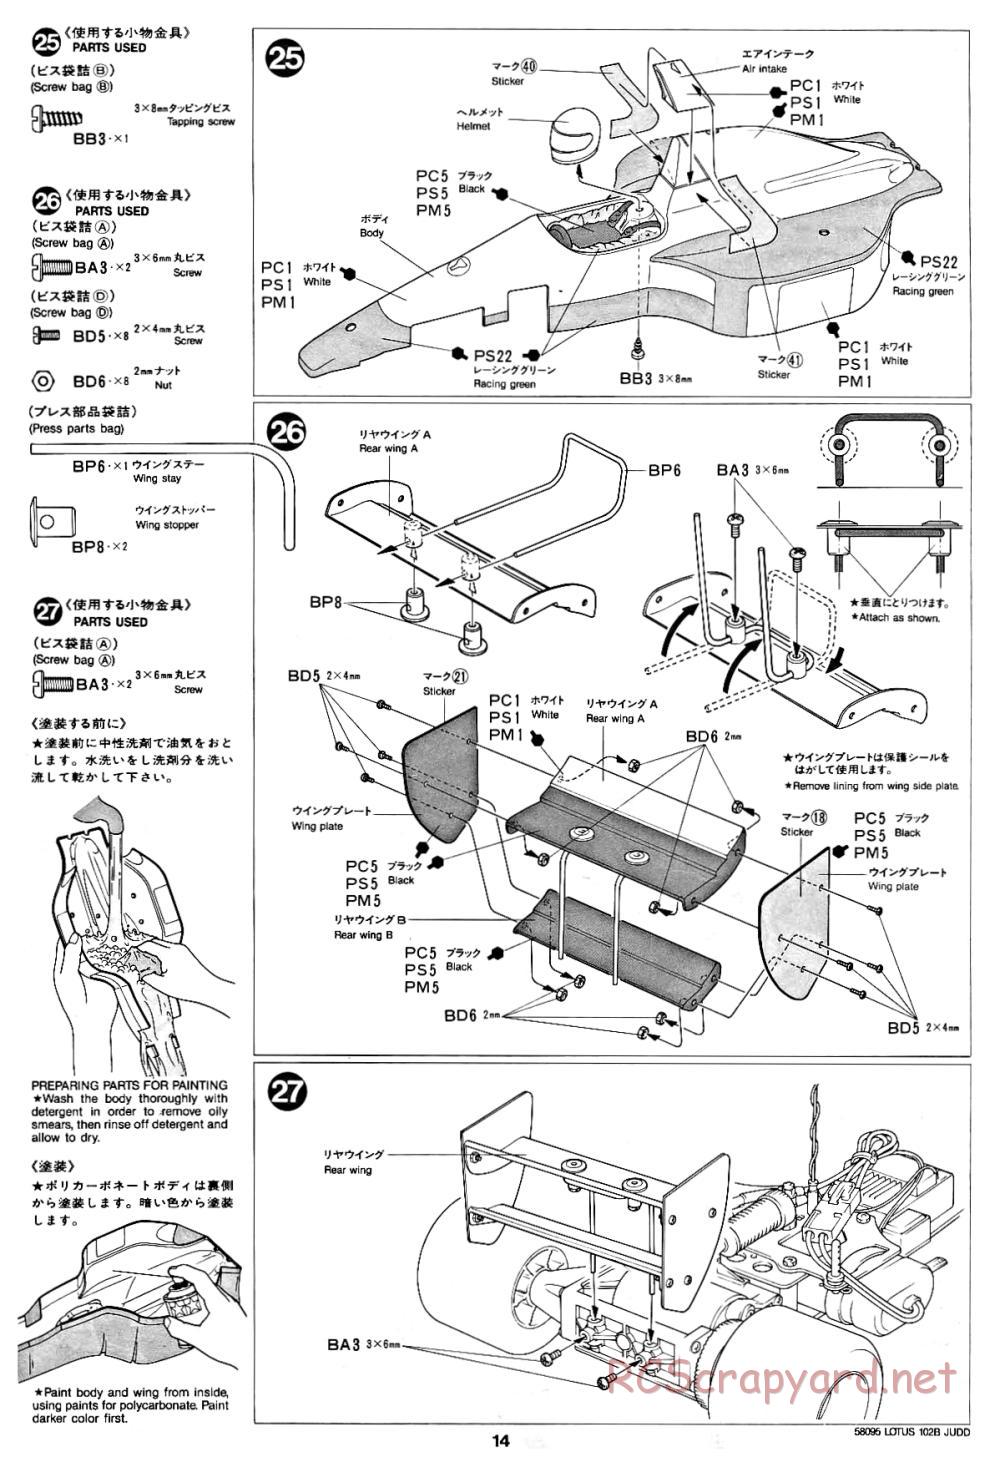 Tamiya - Lotus 102B Judd - 58095 - Manual - Page 14